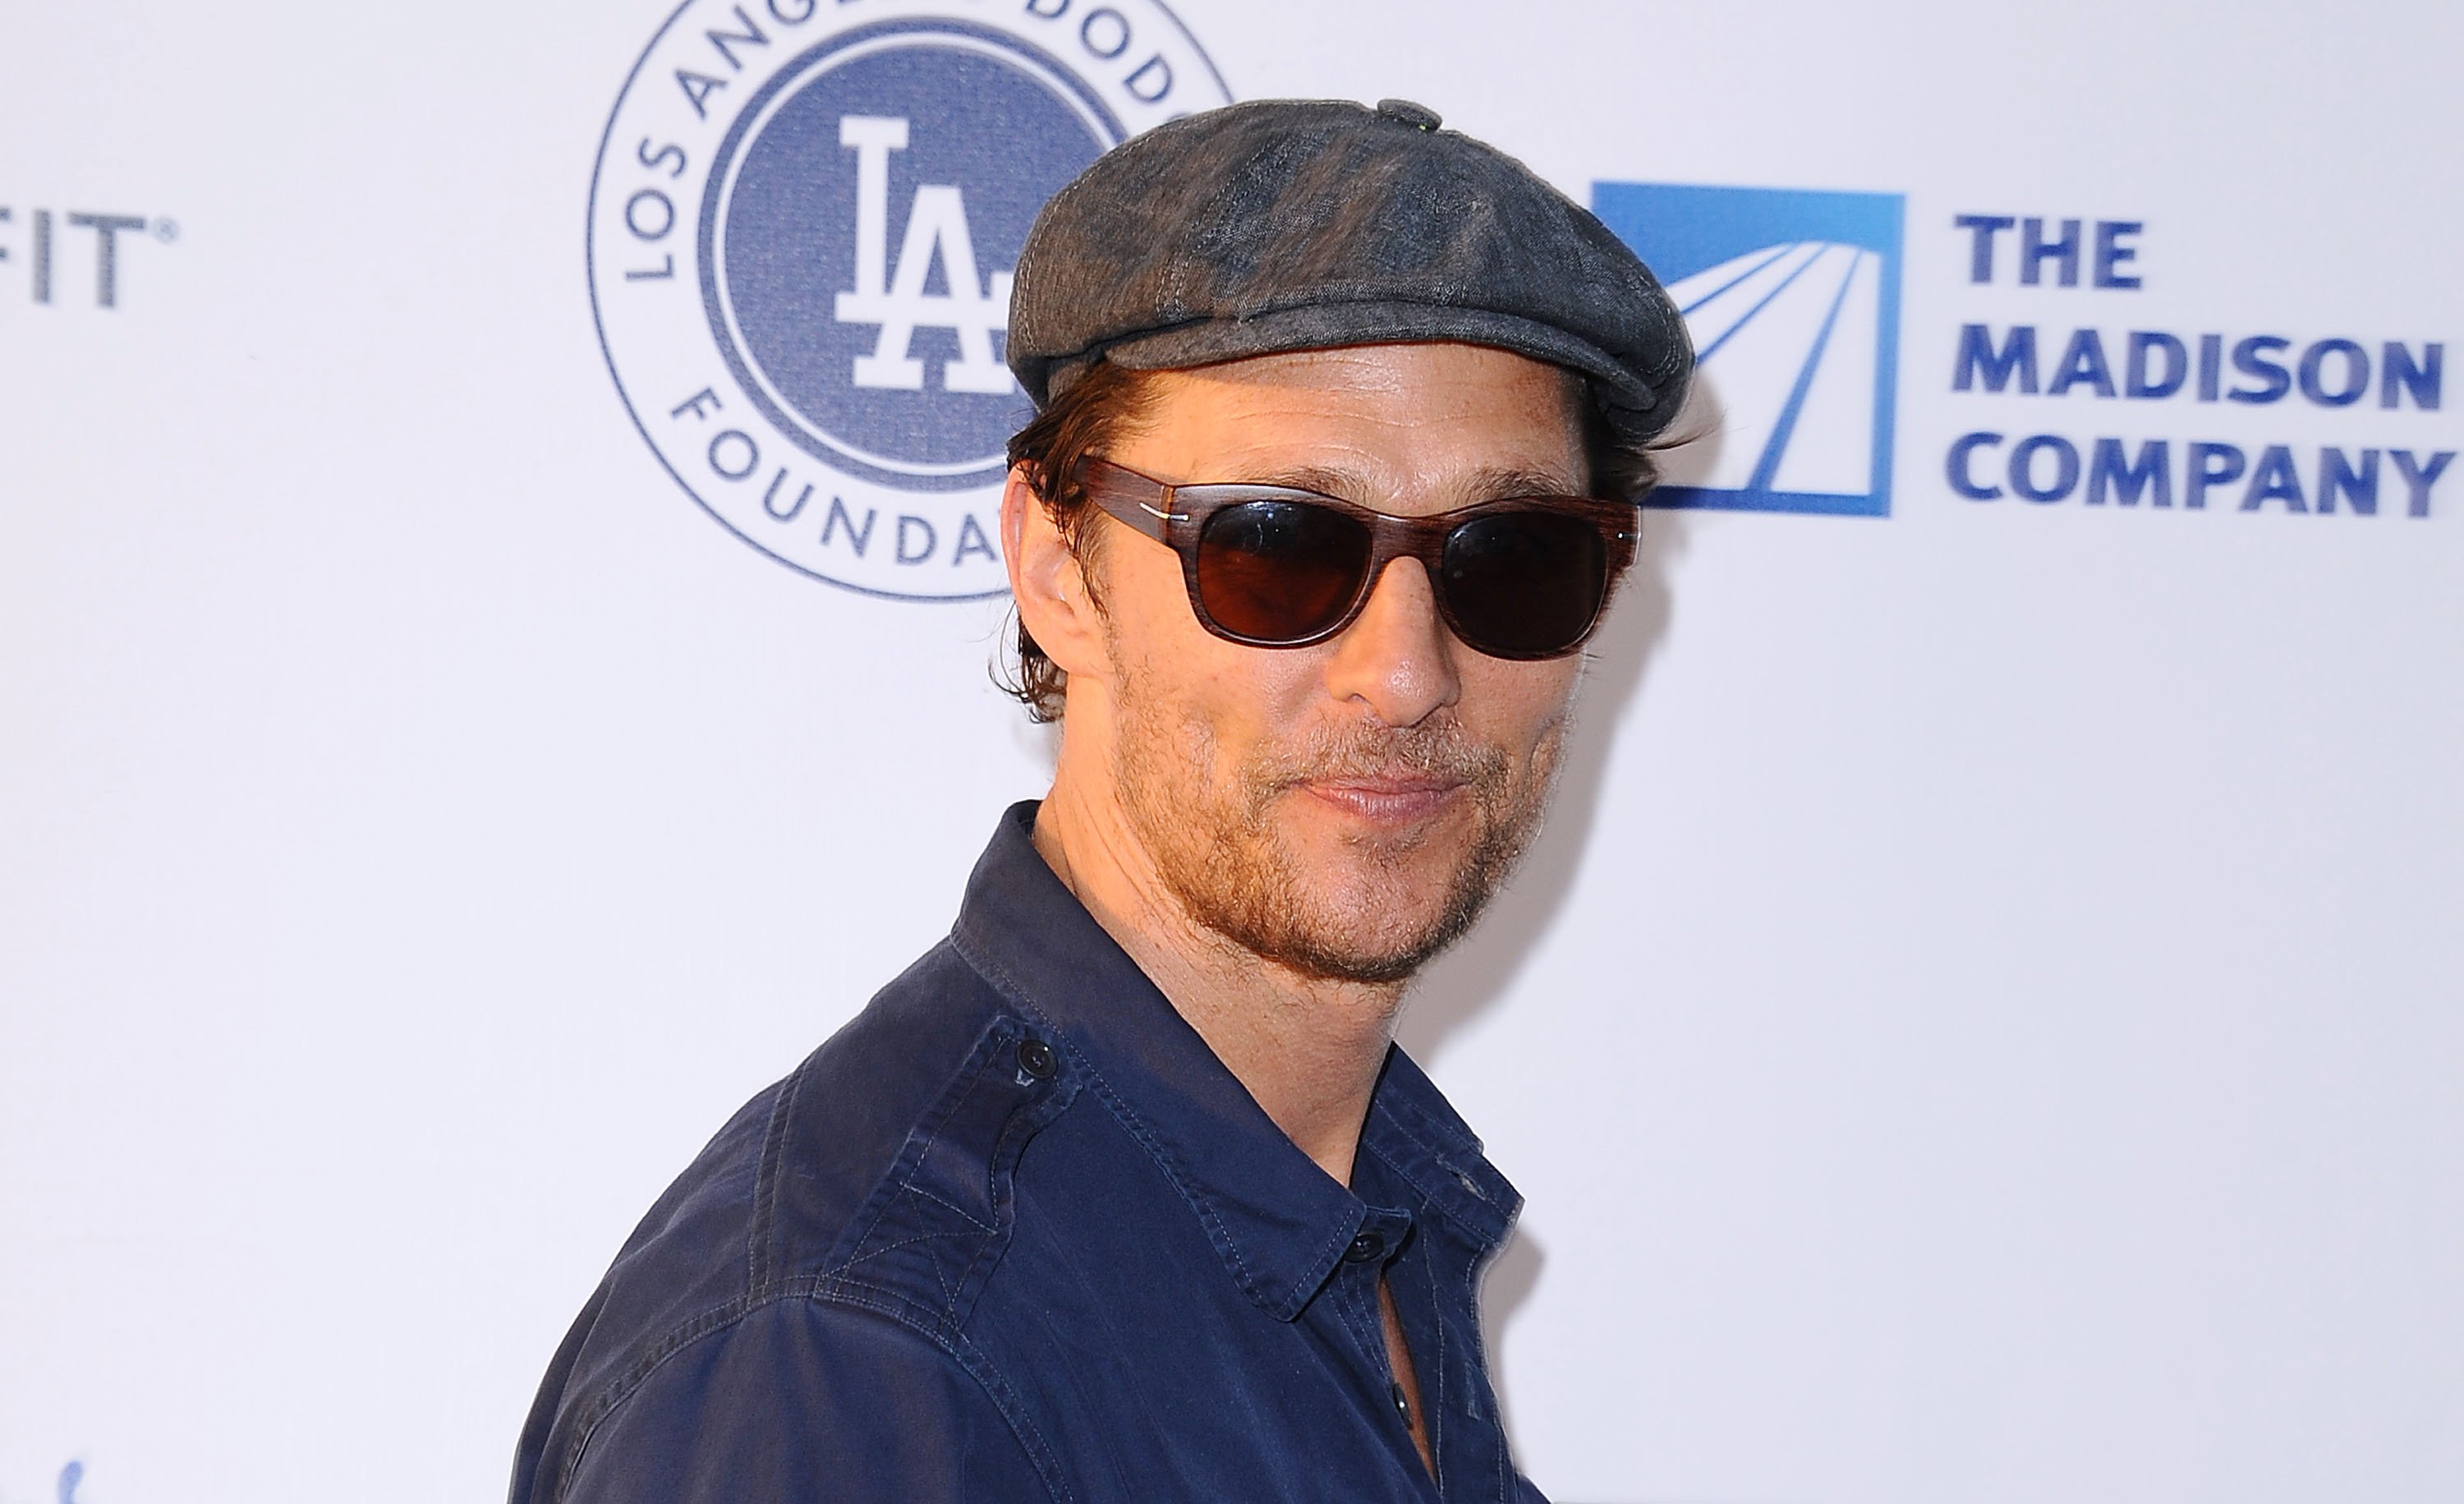 Matthew McConaughey wearing sunglasses and a beret